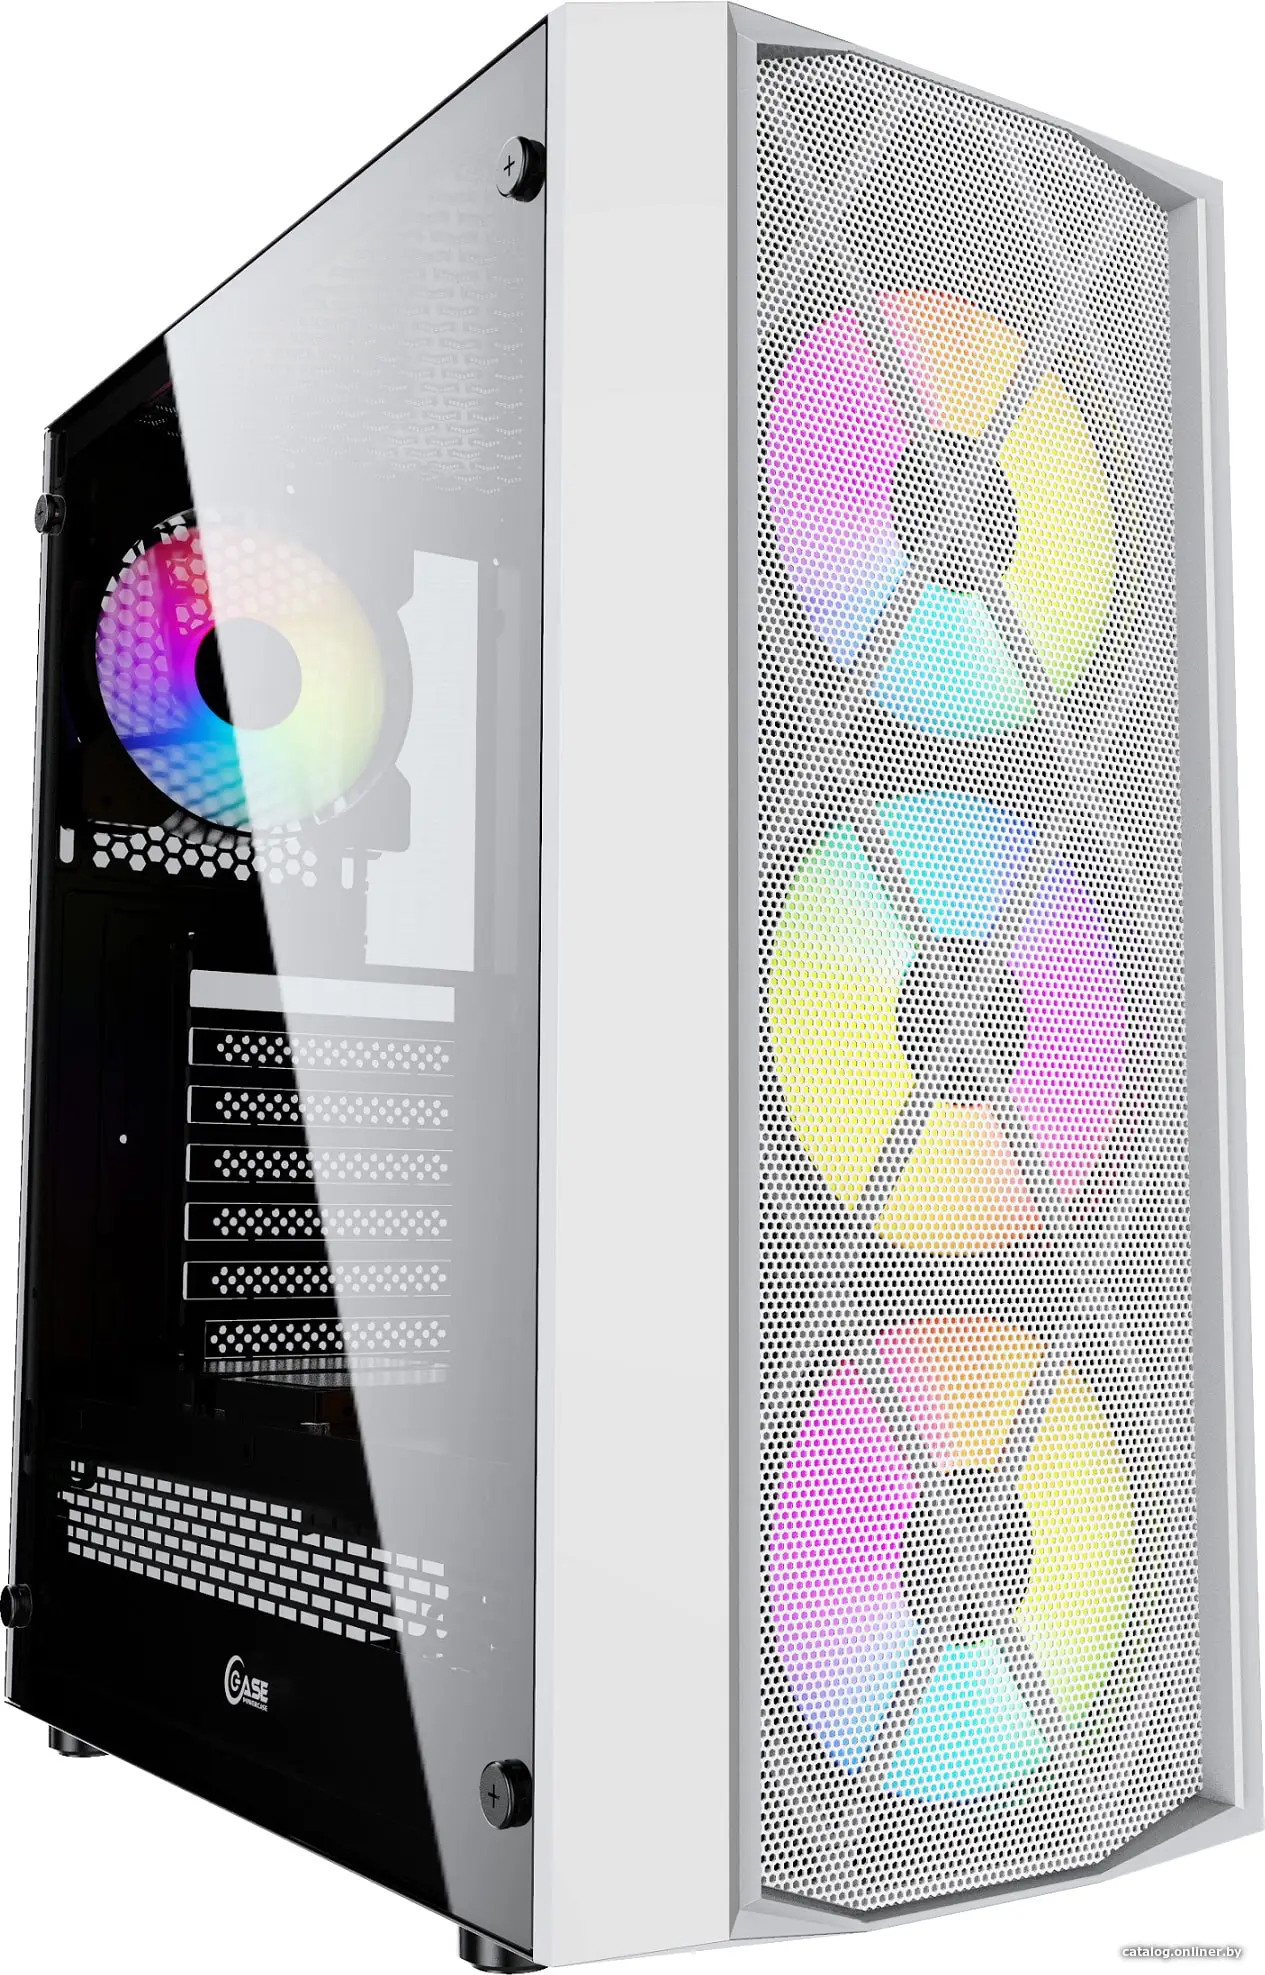 Купить Корпус Powercase Rhombus X4 White, Tempered Glass, Mesh, 4x 120mm 5-color LED fan, белый, ATX  (CMRMW-L4), цена, опт и розница